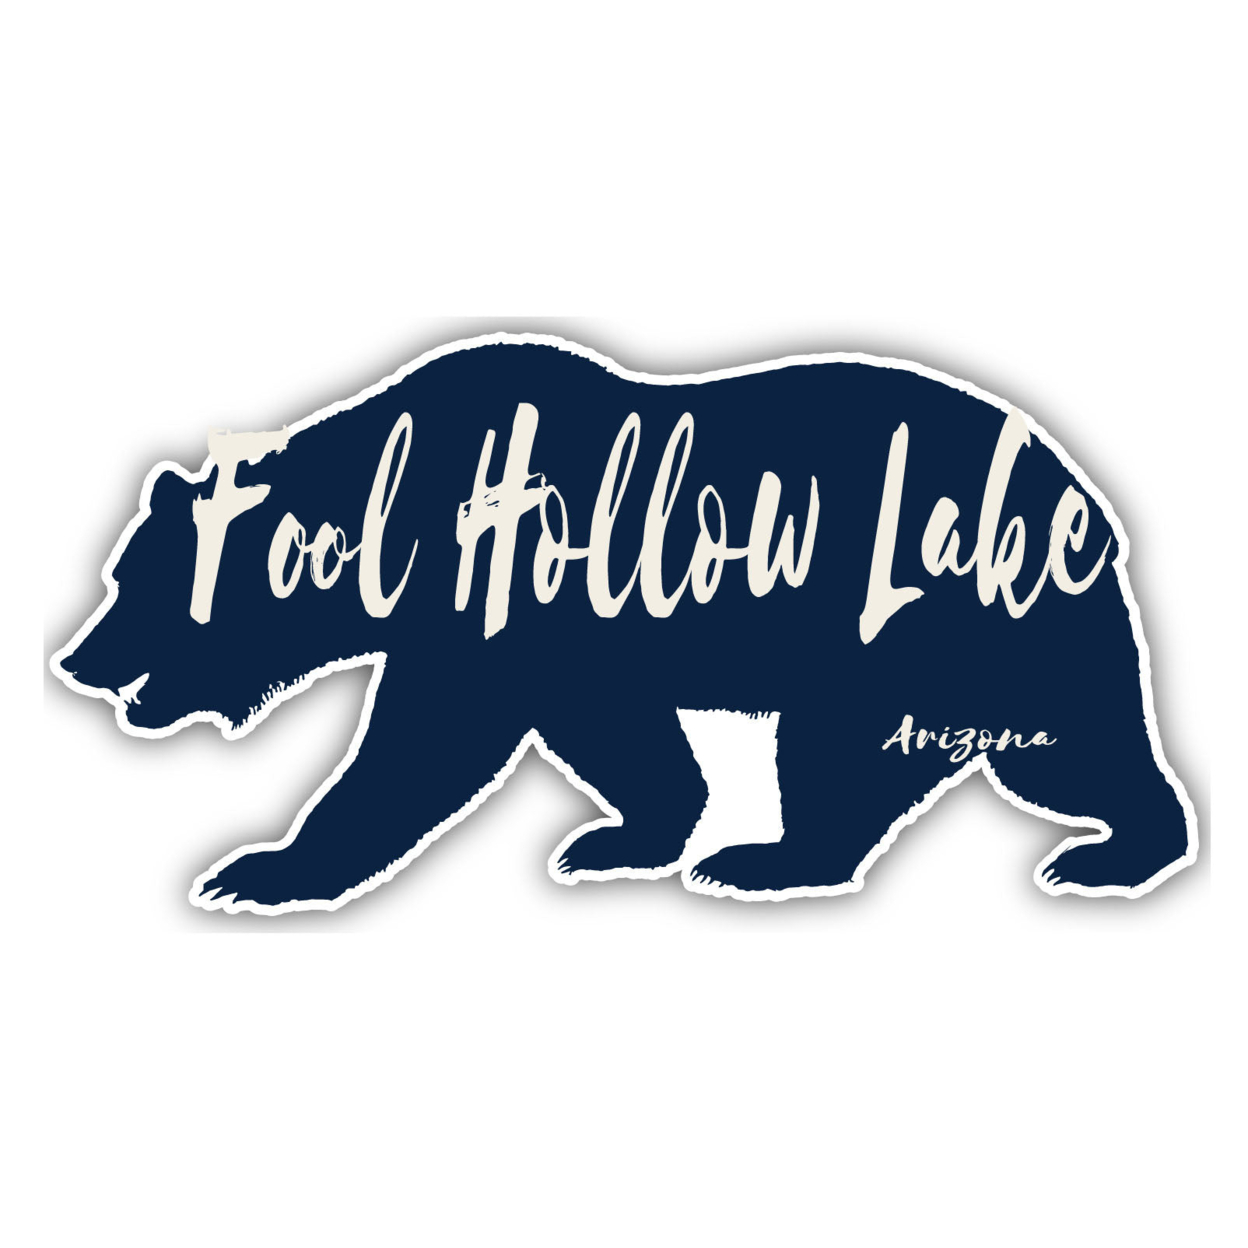 Fool Hollow Lake Arizona Souvenir Decorative Stickers (Choose Theme And Size) - Single Unit, 8-Inch, Tent